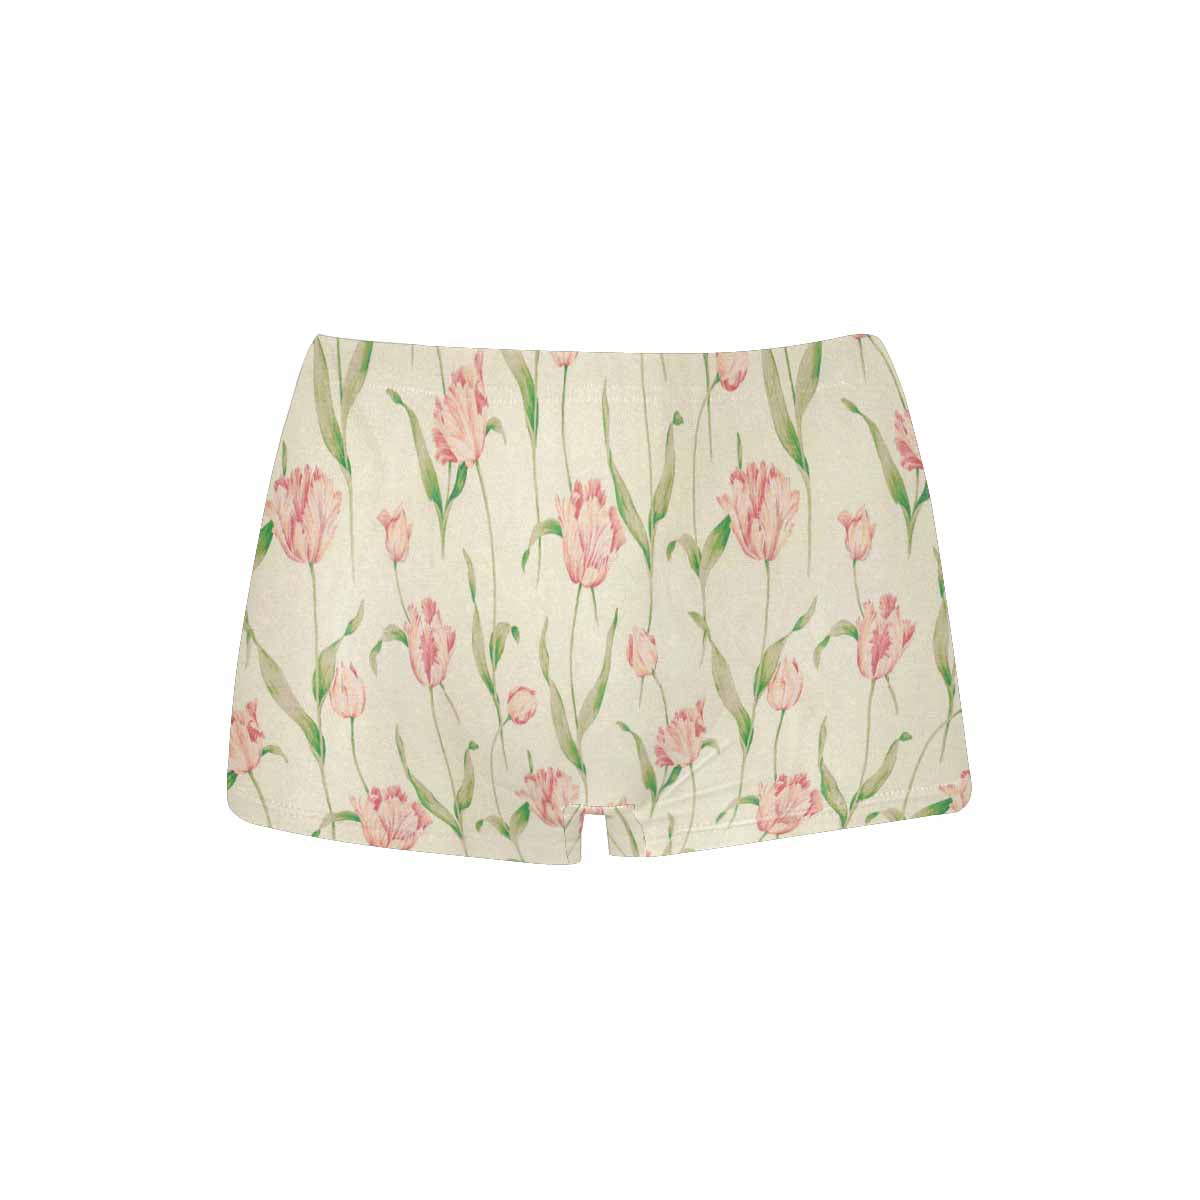 Floral 2, boyshorts, daisy dukes, pum pum shorts, panties, design 14